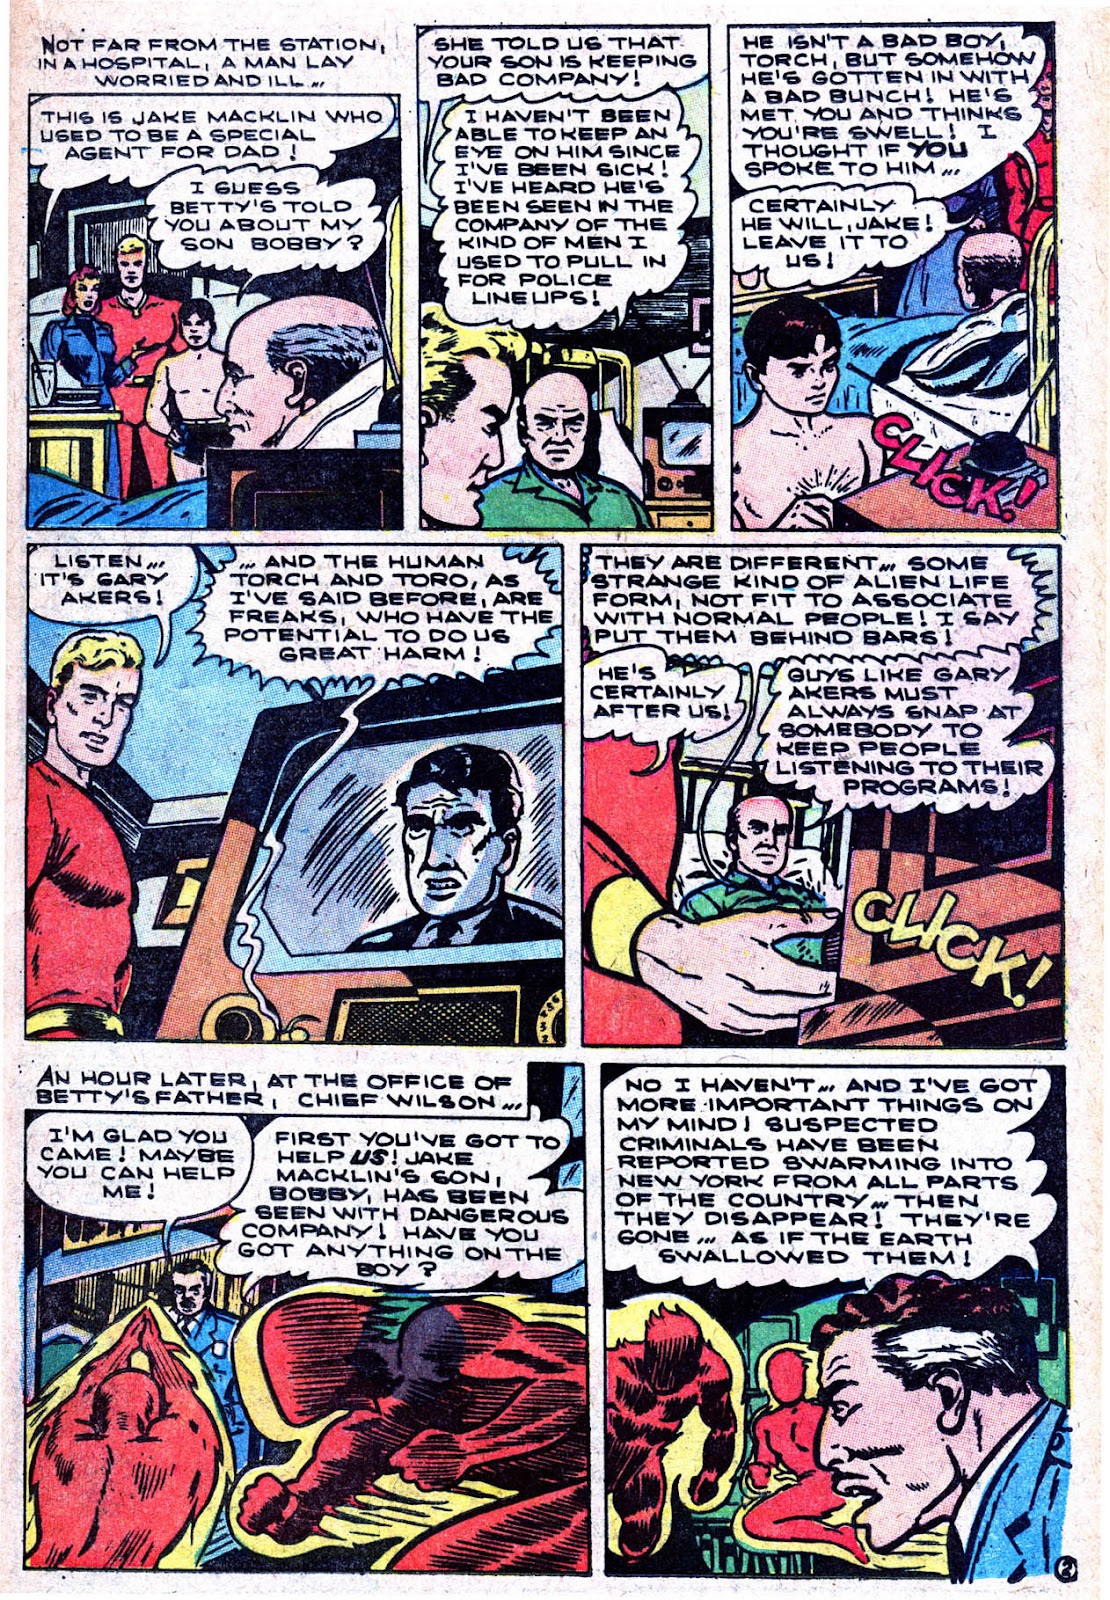 Marvel Super-Heroes (1967) #13, Comic Issues